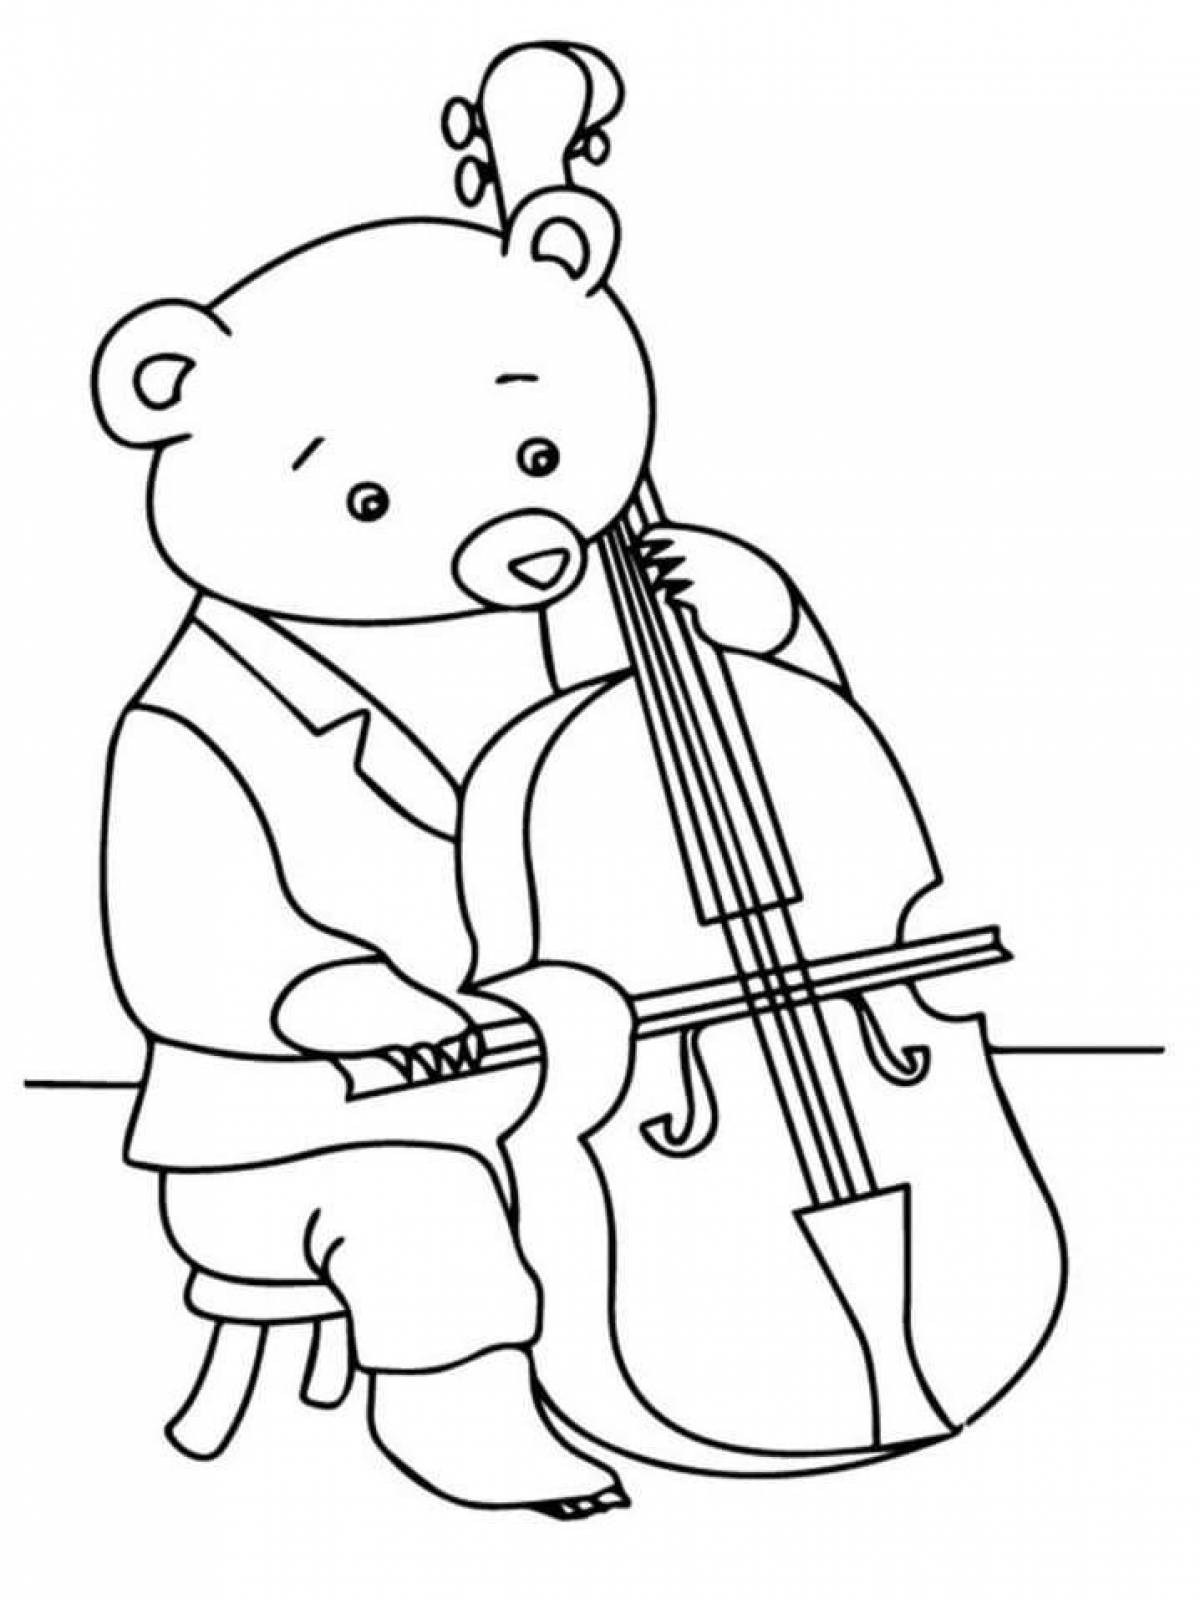 Fancy cello coloring book